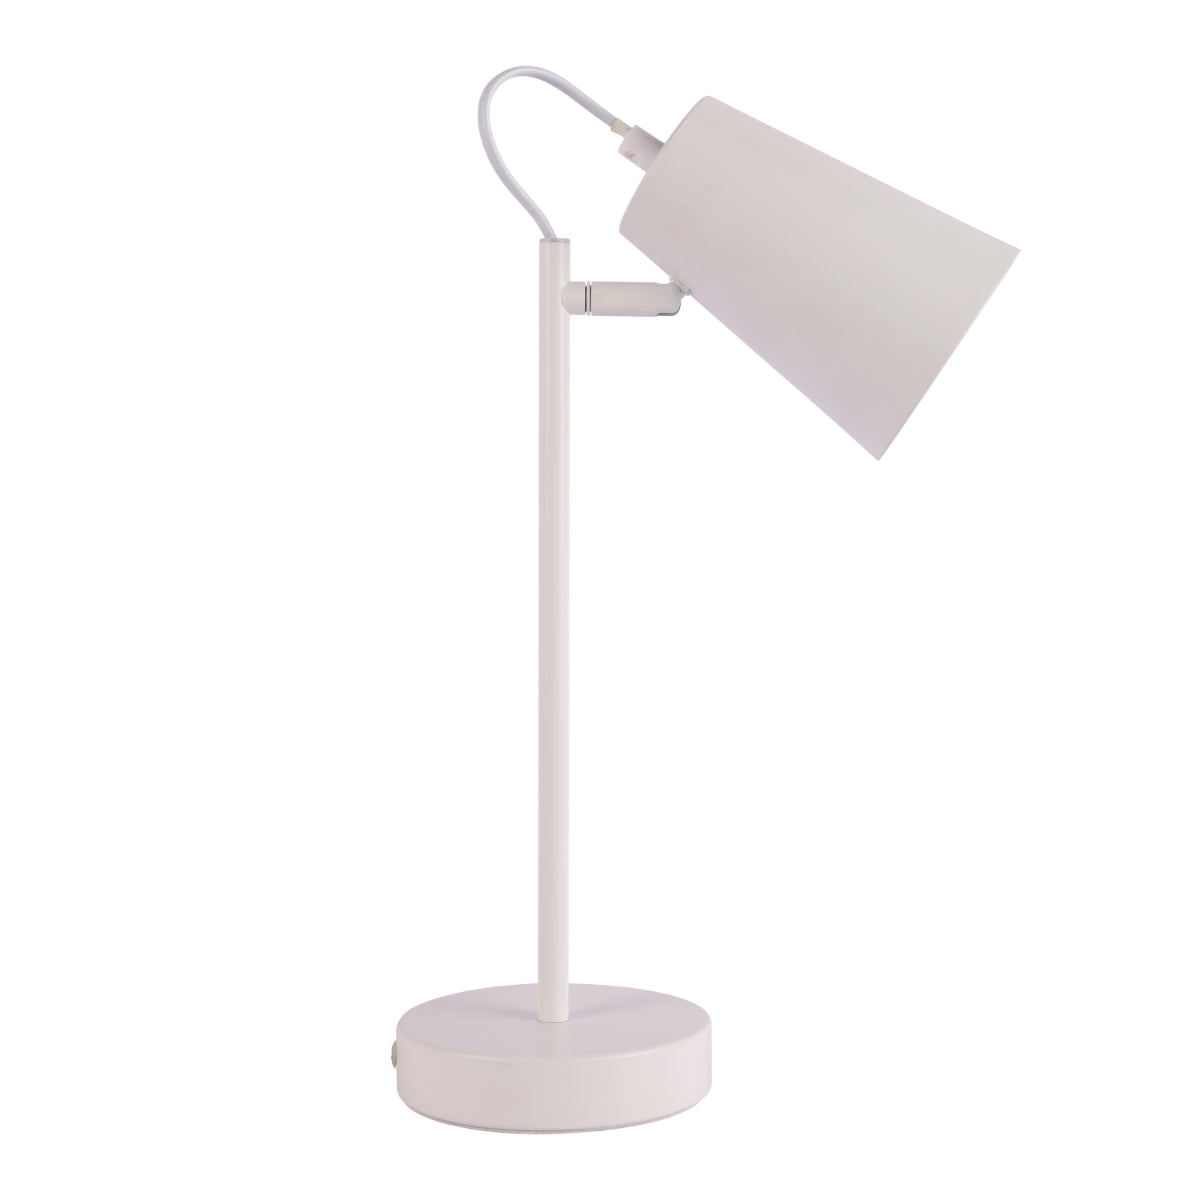 Main image of Sleek Cut Cone Desk Lamp in Vibrant Colors - Modern Elegance 130-03666